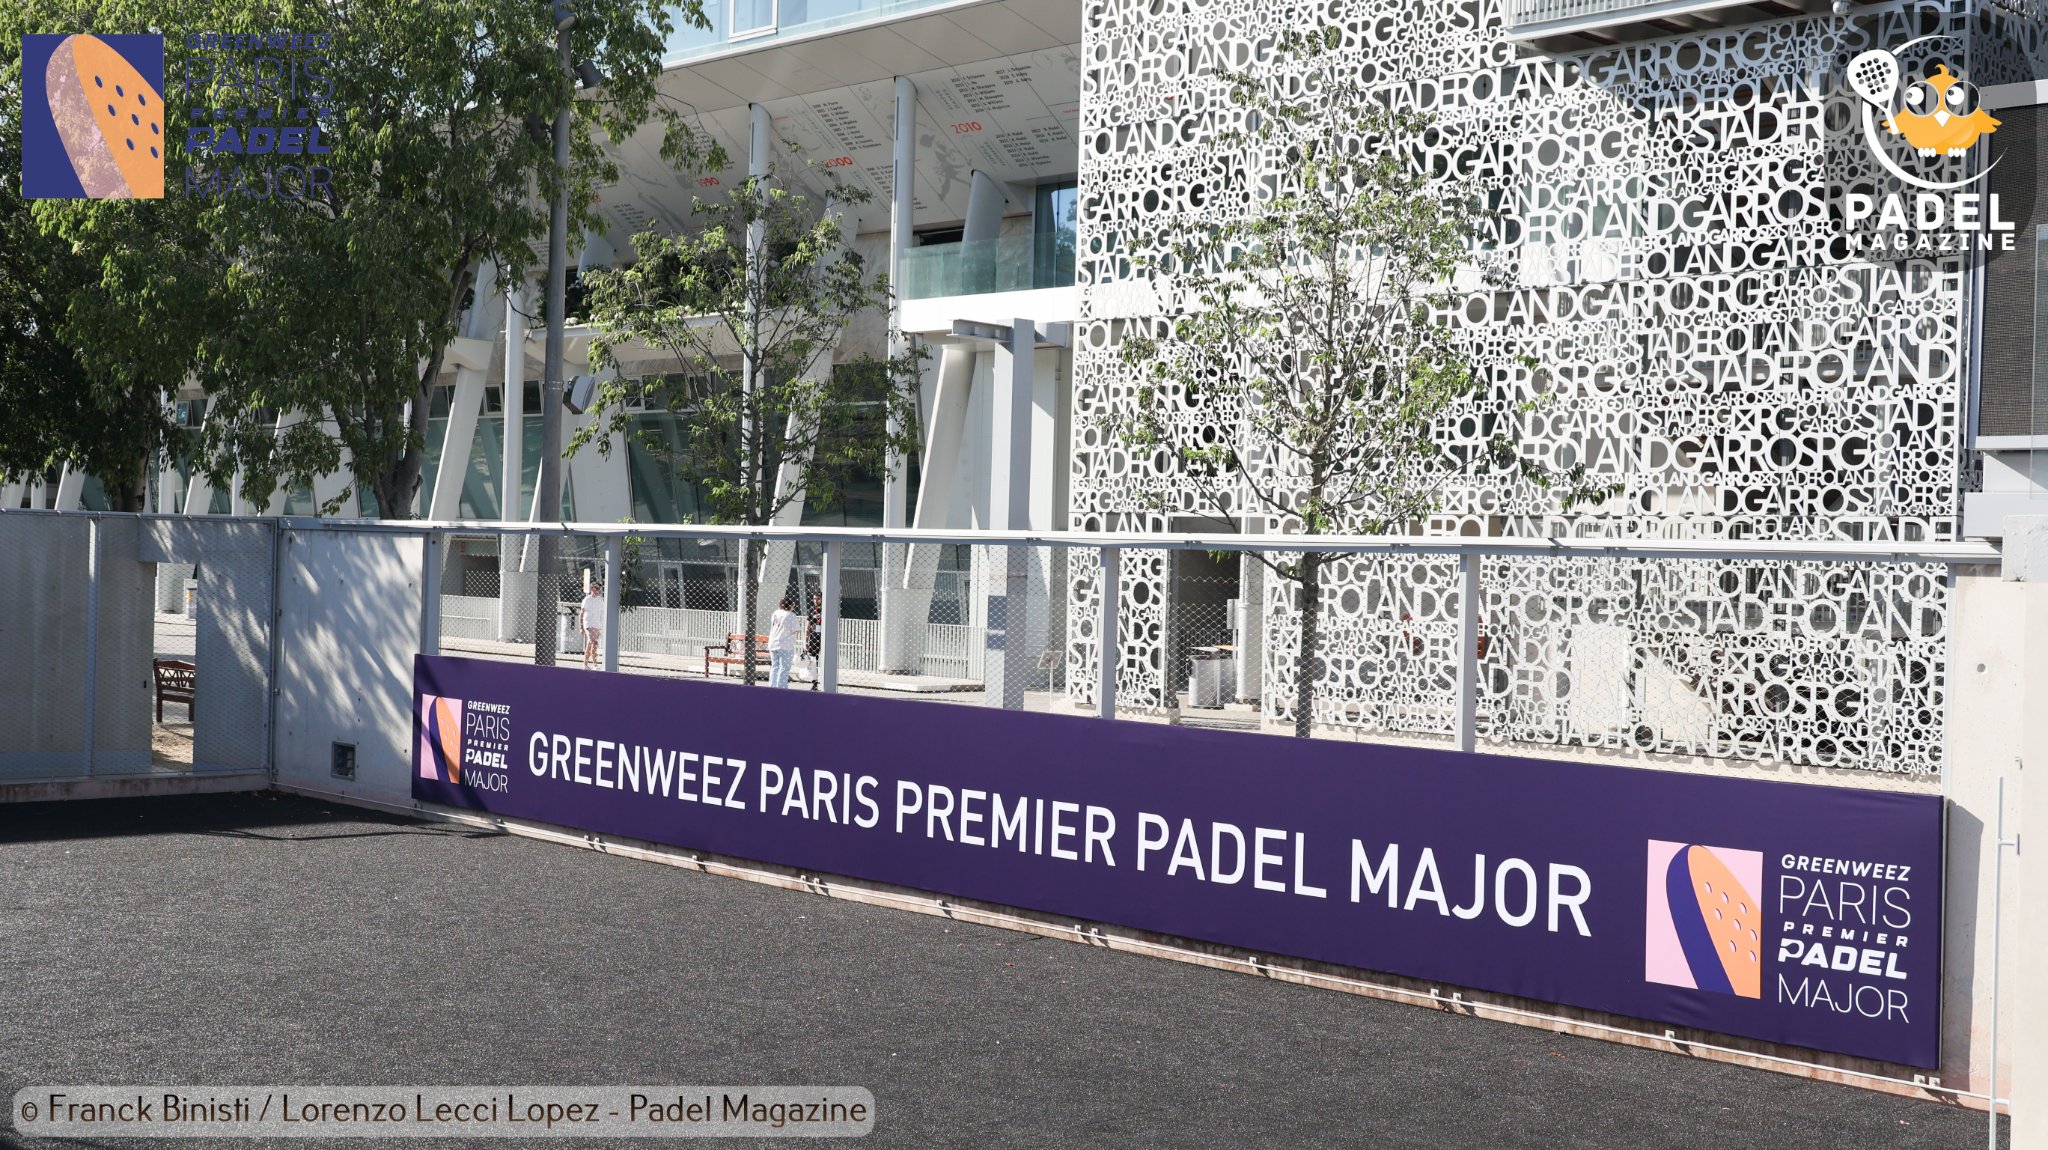 Greenweez Paris Premier Padel Major Roland Garros 2022